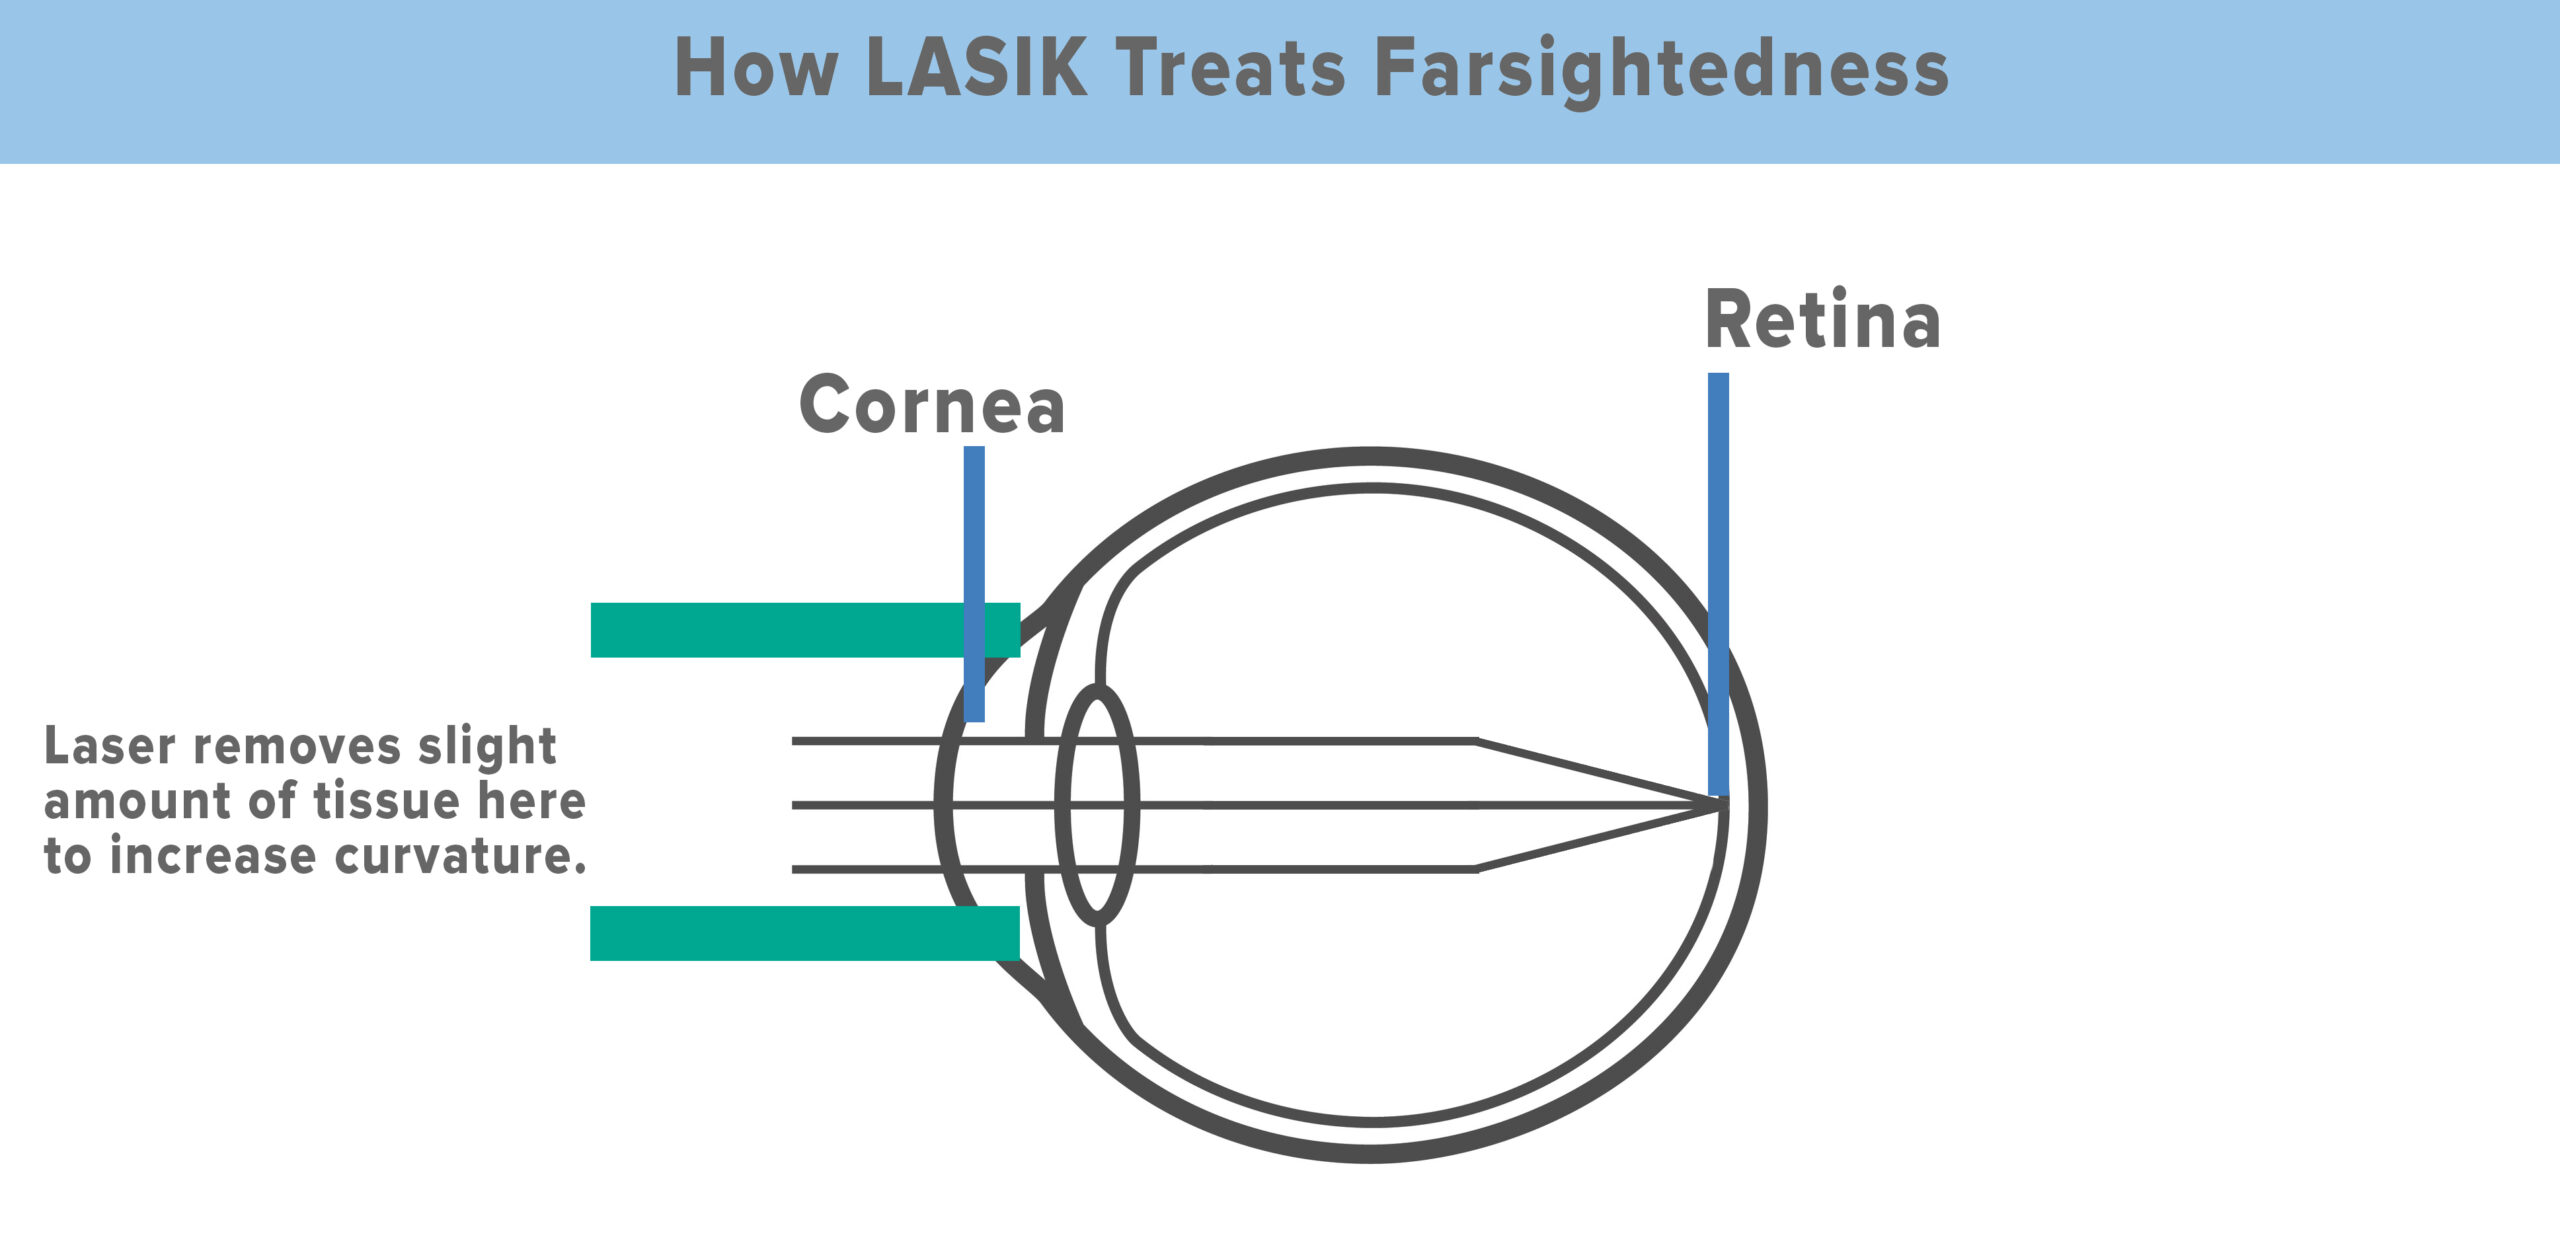 How LASIK corrects farsightedness